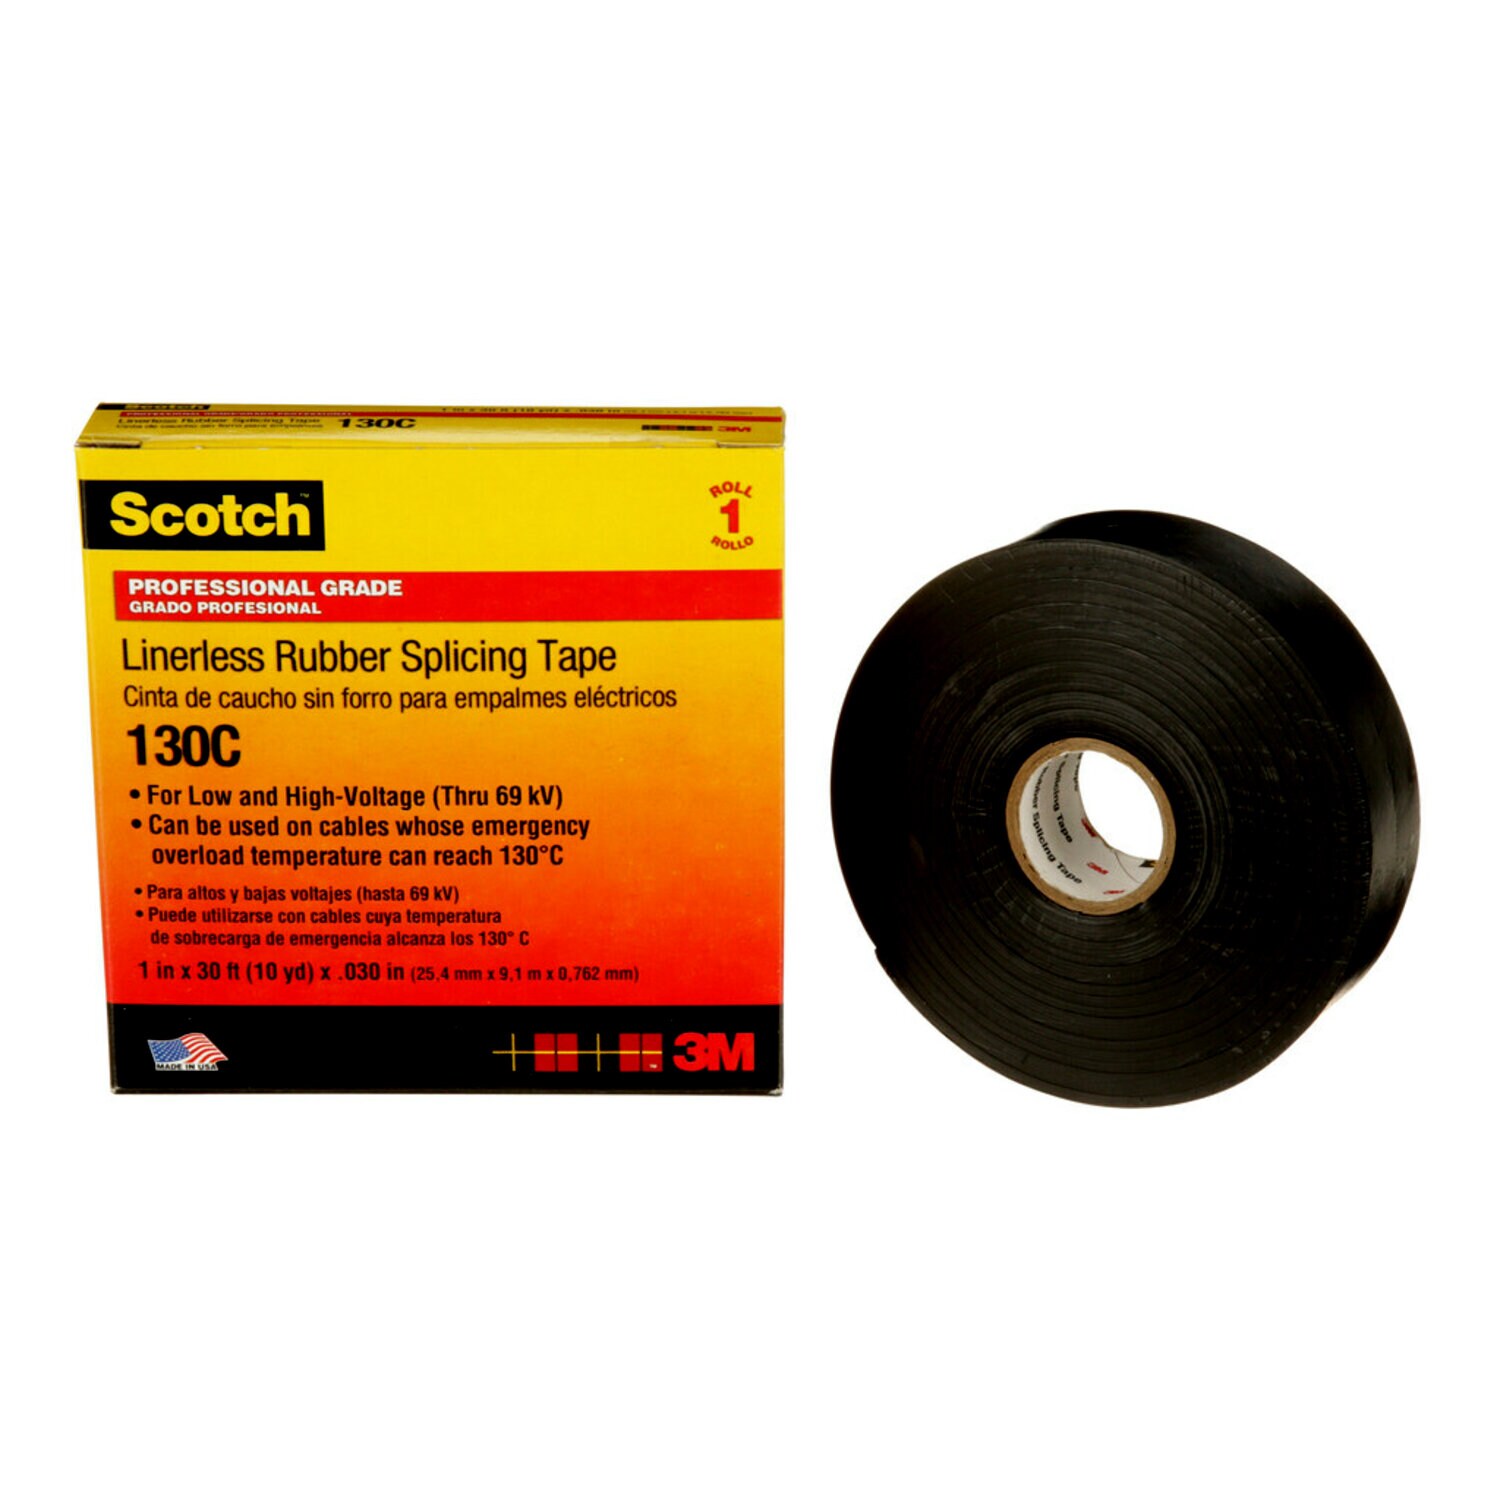 7000006090 - Scotch Linerless Rubber Splicing Tape 130C, 1 in x 30 ft, Black, 1
roll/carton, 24 rolls/Case